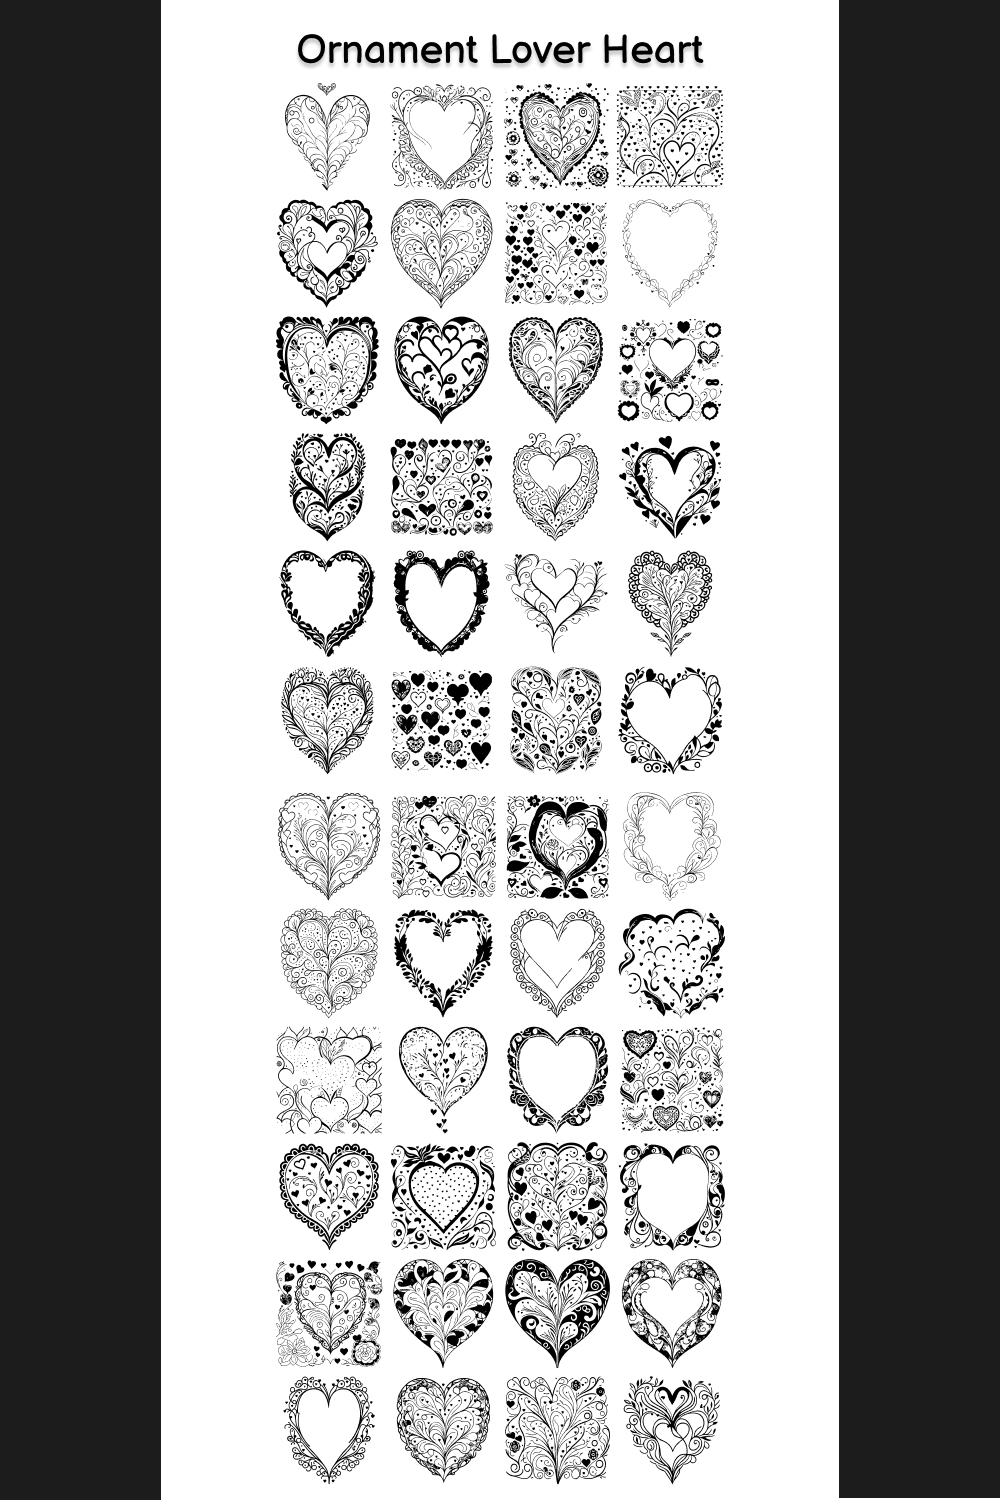 Ornament Lover Heart Element Draw Black pinterest preview image.